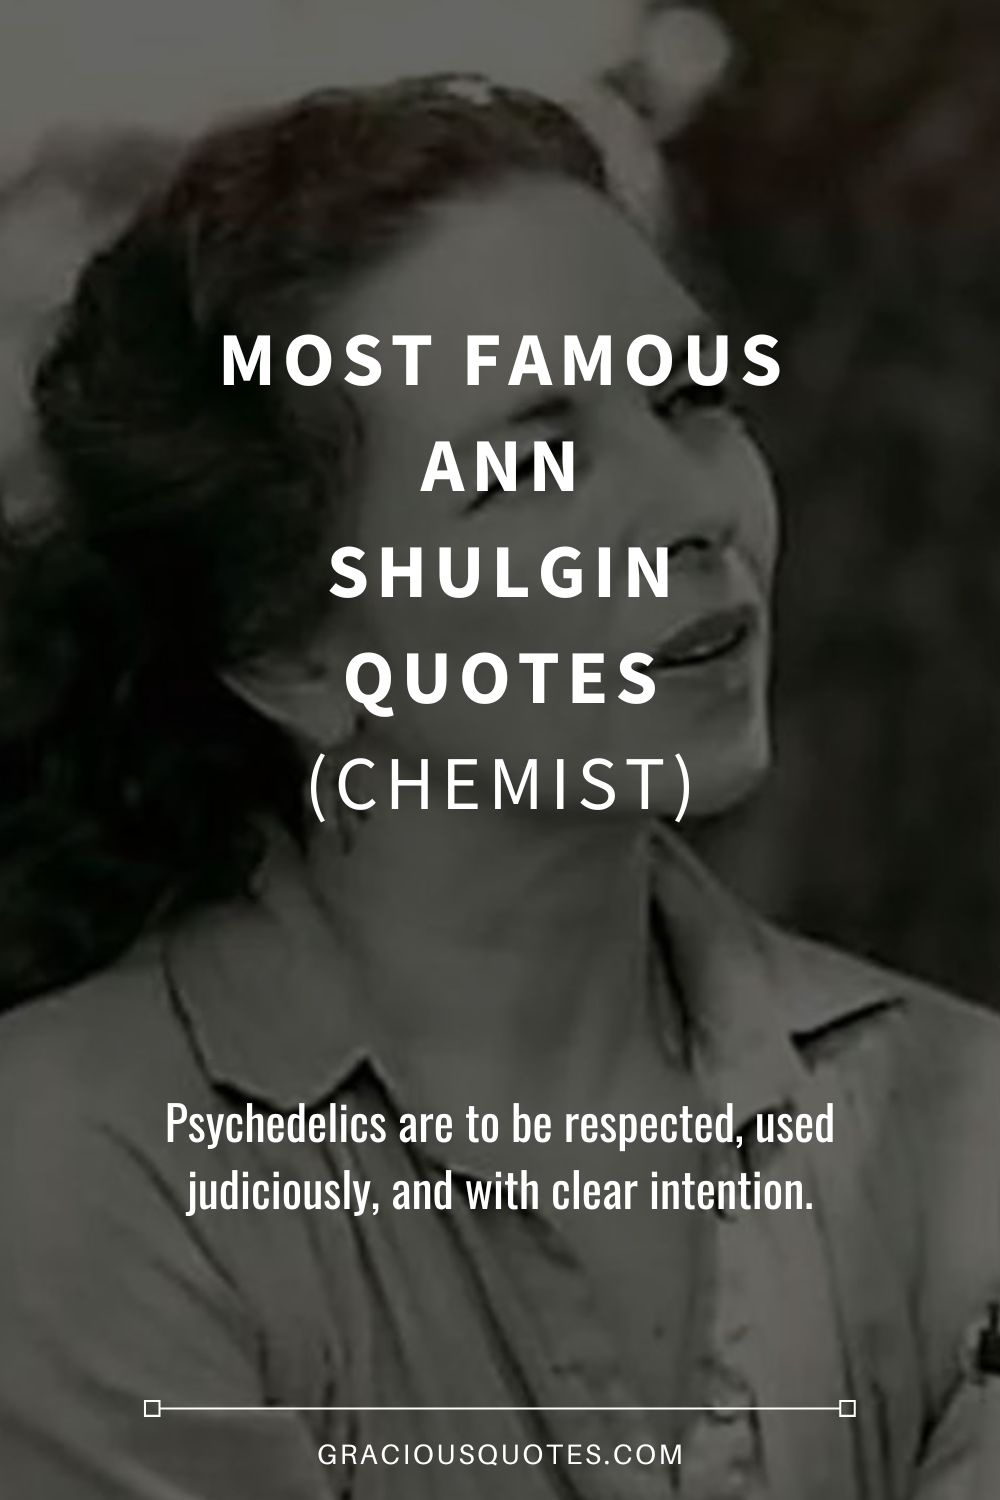 Most Famous Ann Shulgin Quotes (CHEMIST) - Gracious Quotes